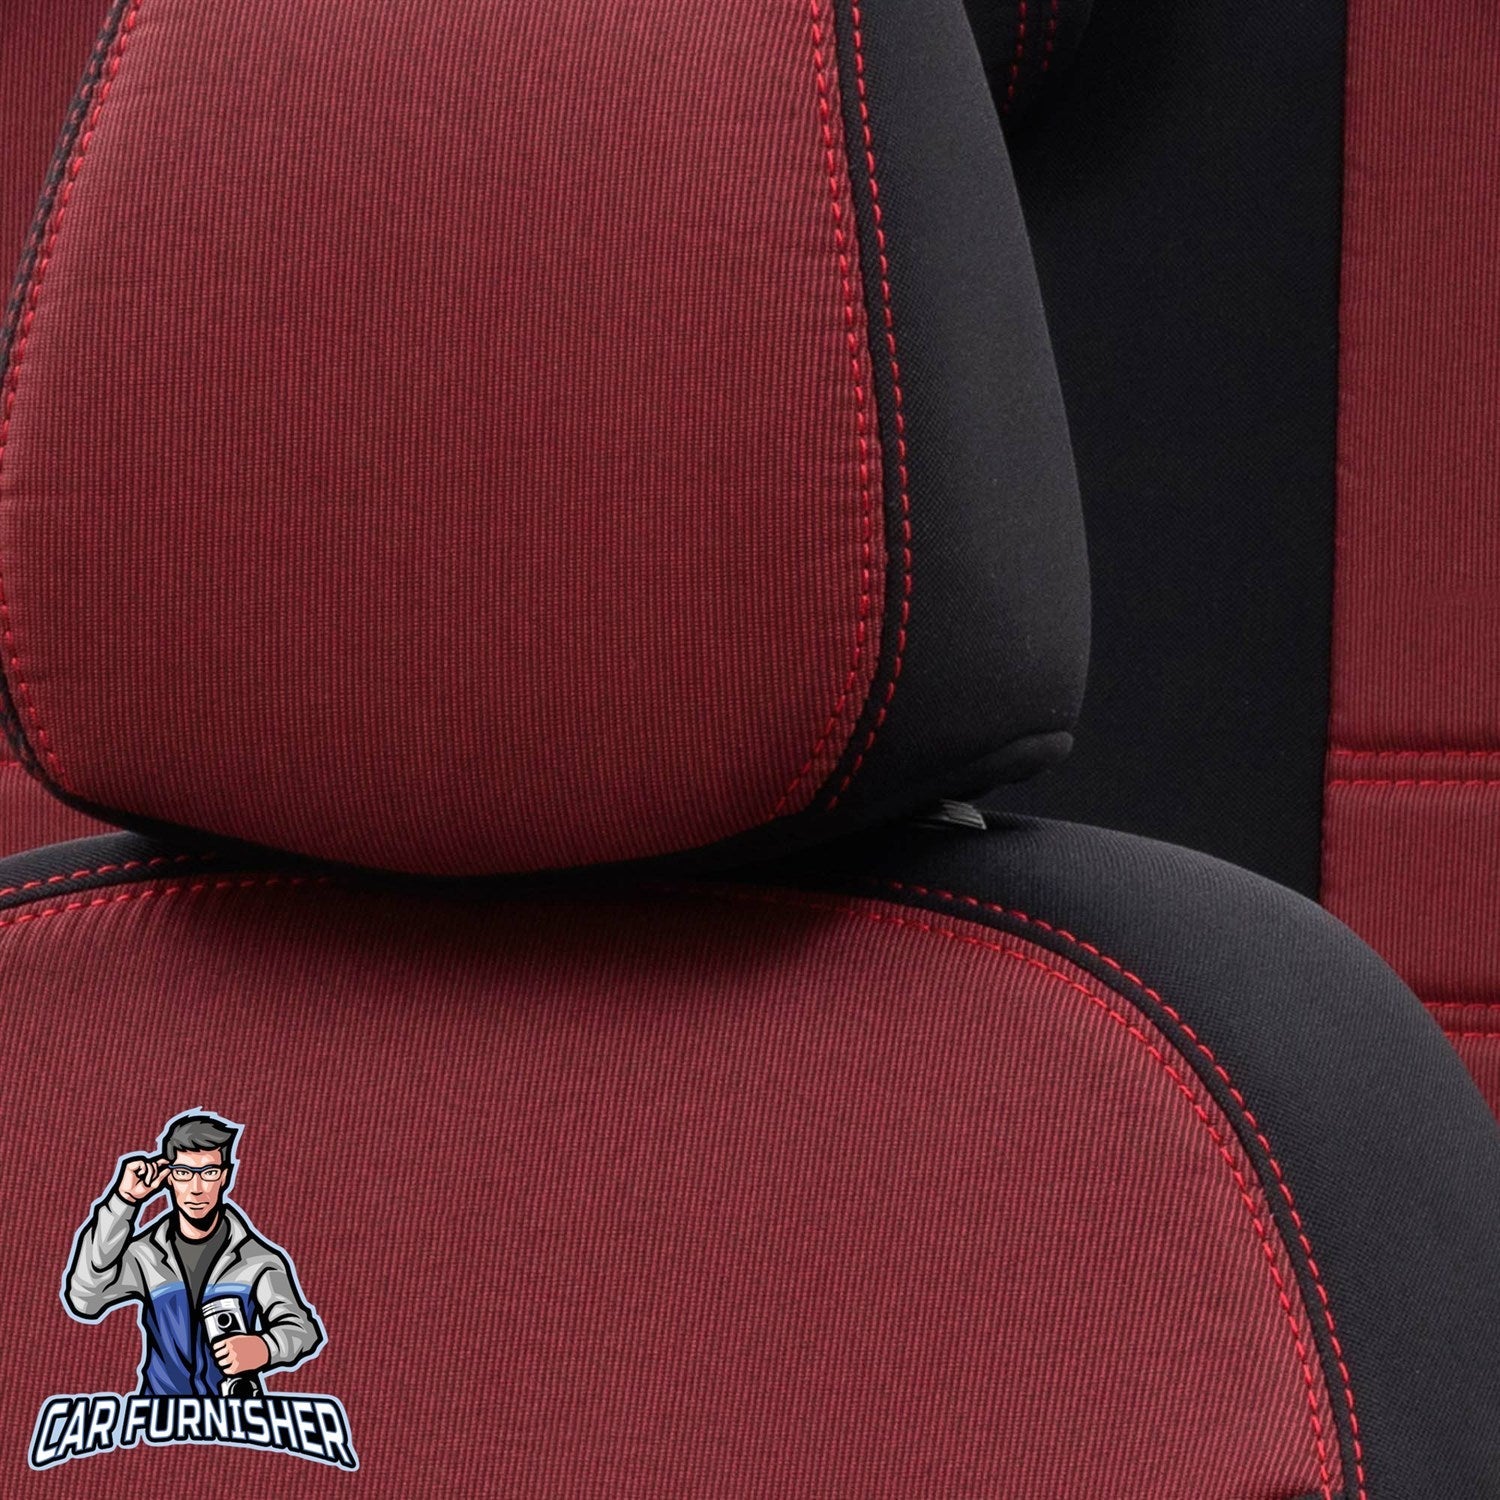 Mercedes S Class Seat Covers Original Jacquard Design Red Jacquard Fabric